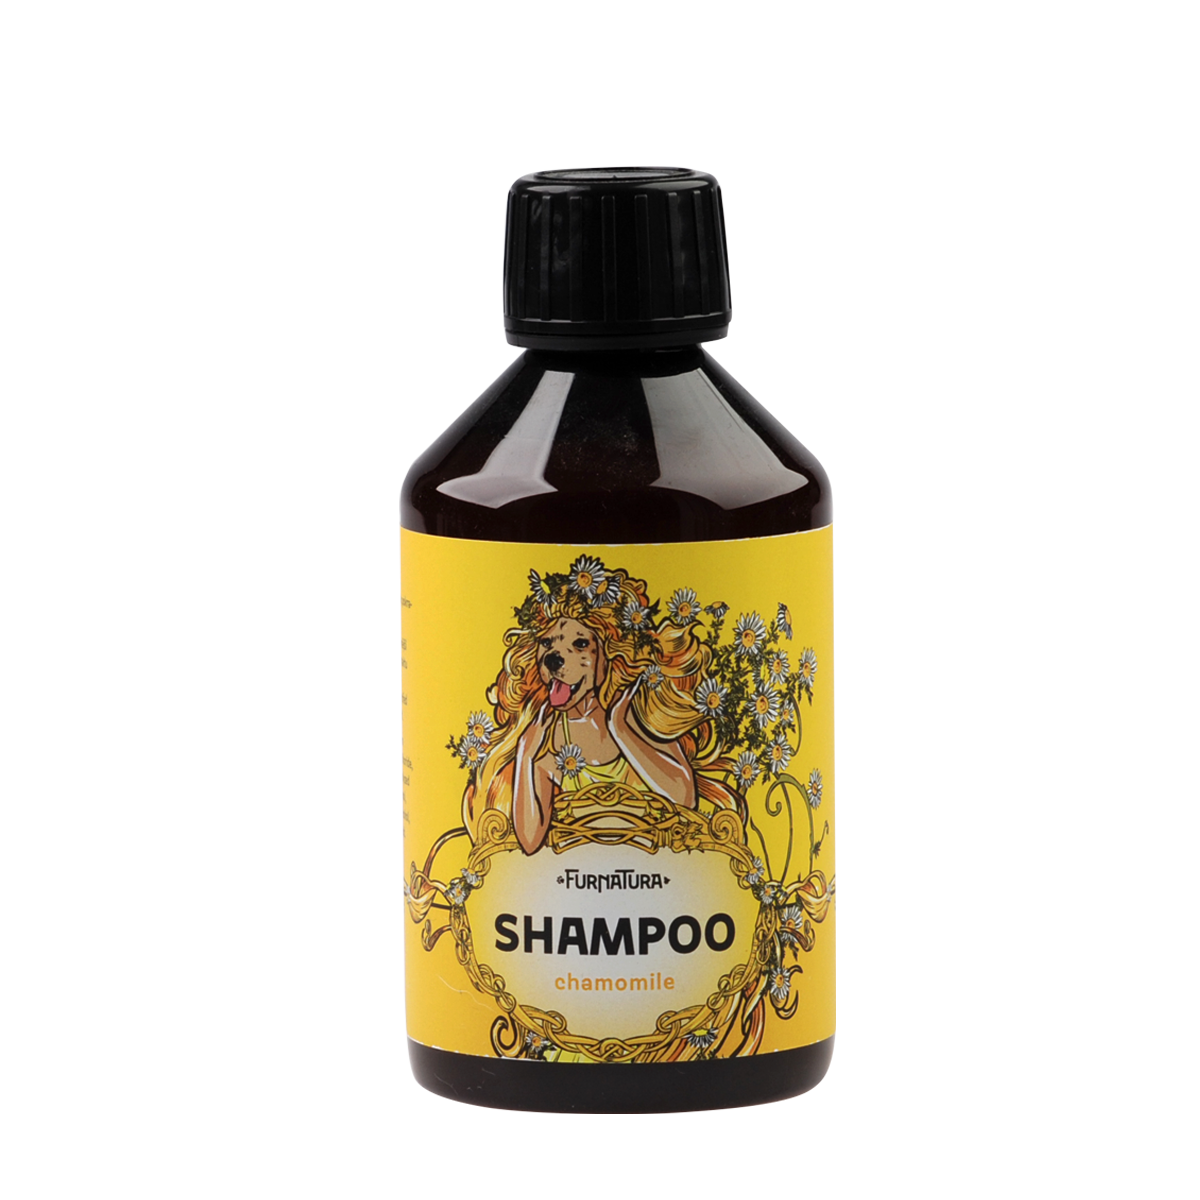 Furnatura Natural Non-chemical Dog Shampoo 250ml -- Chamomile